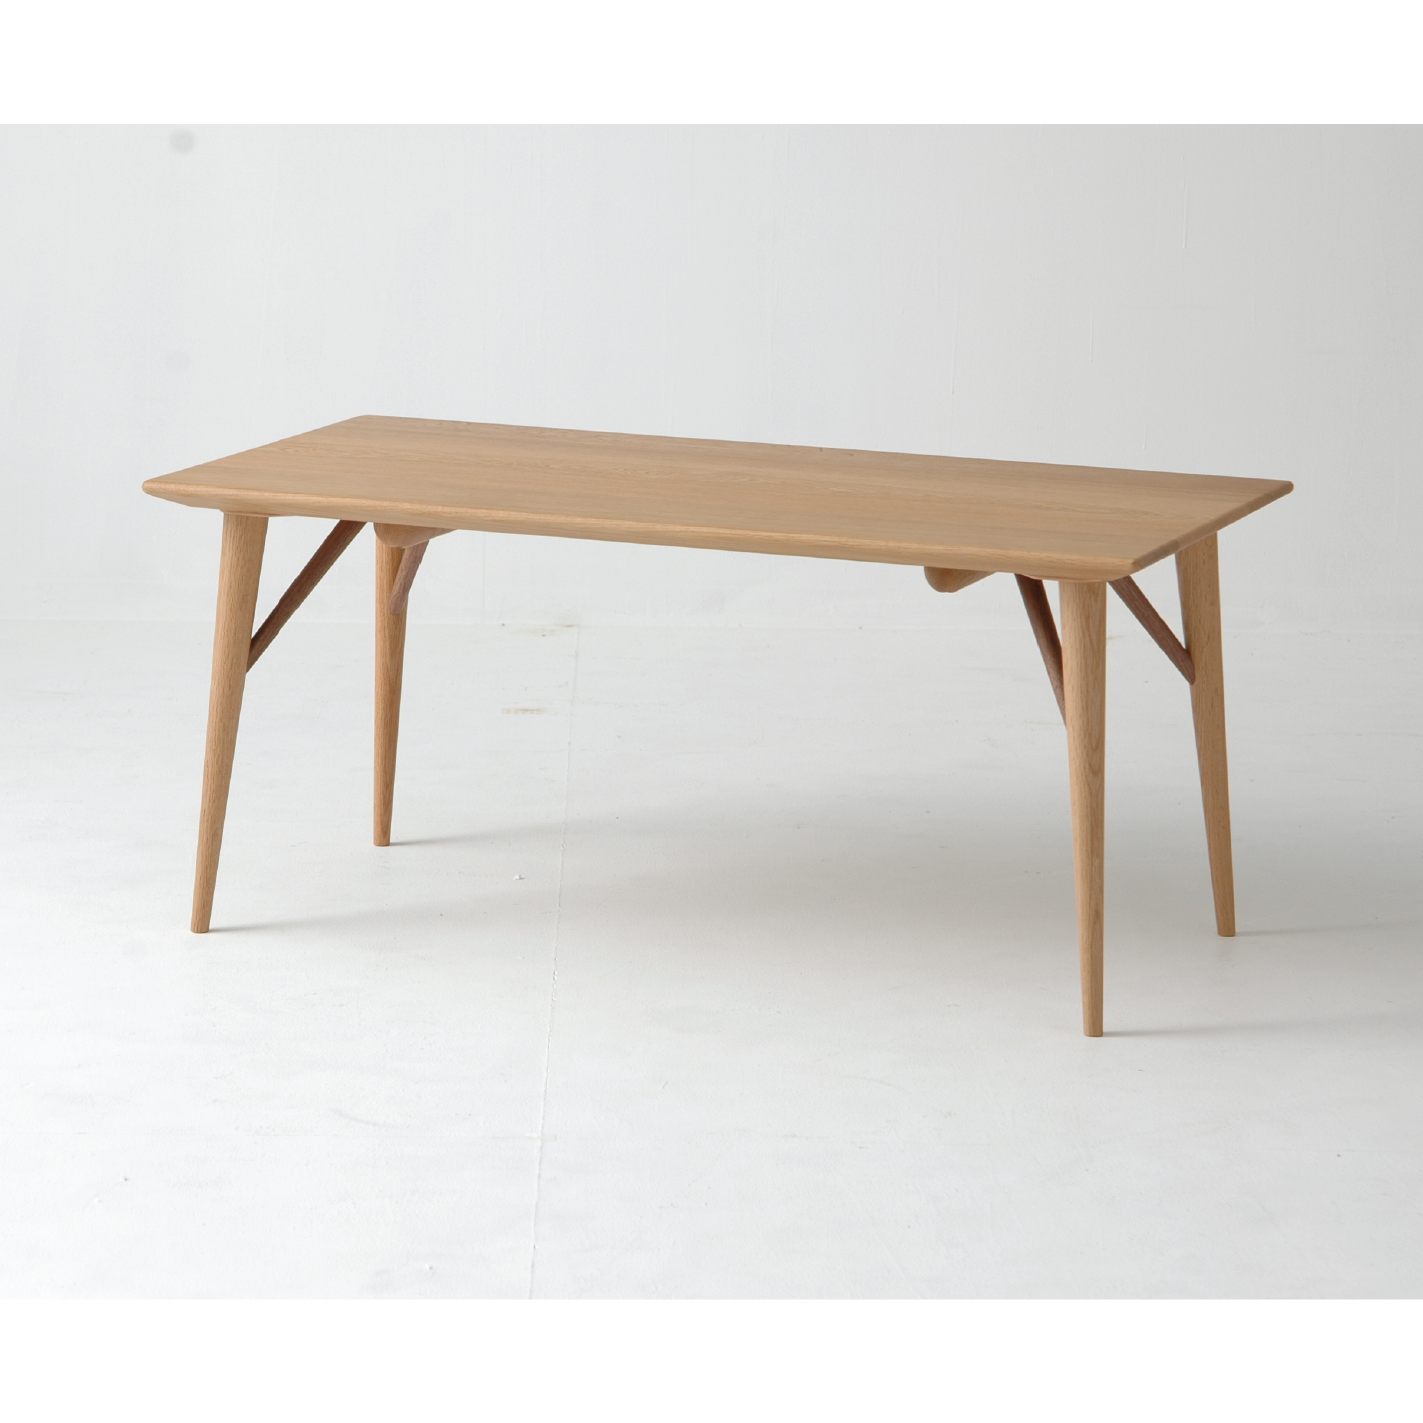 Nissin - White Wood Rectangle Living Table